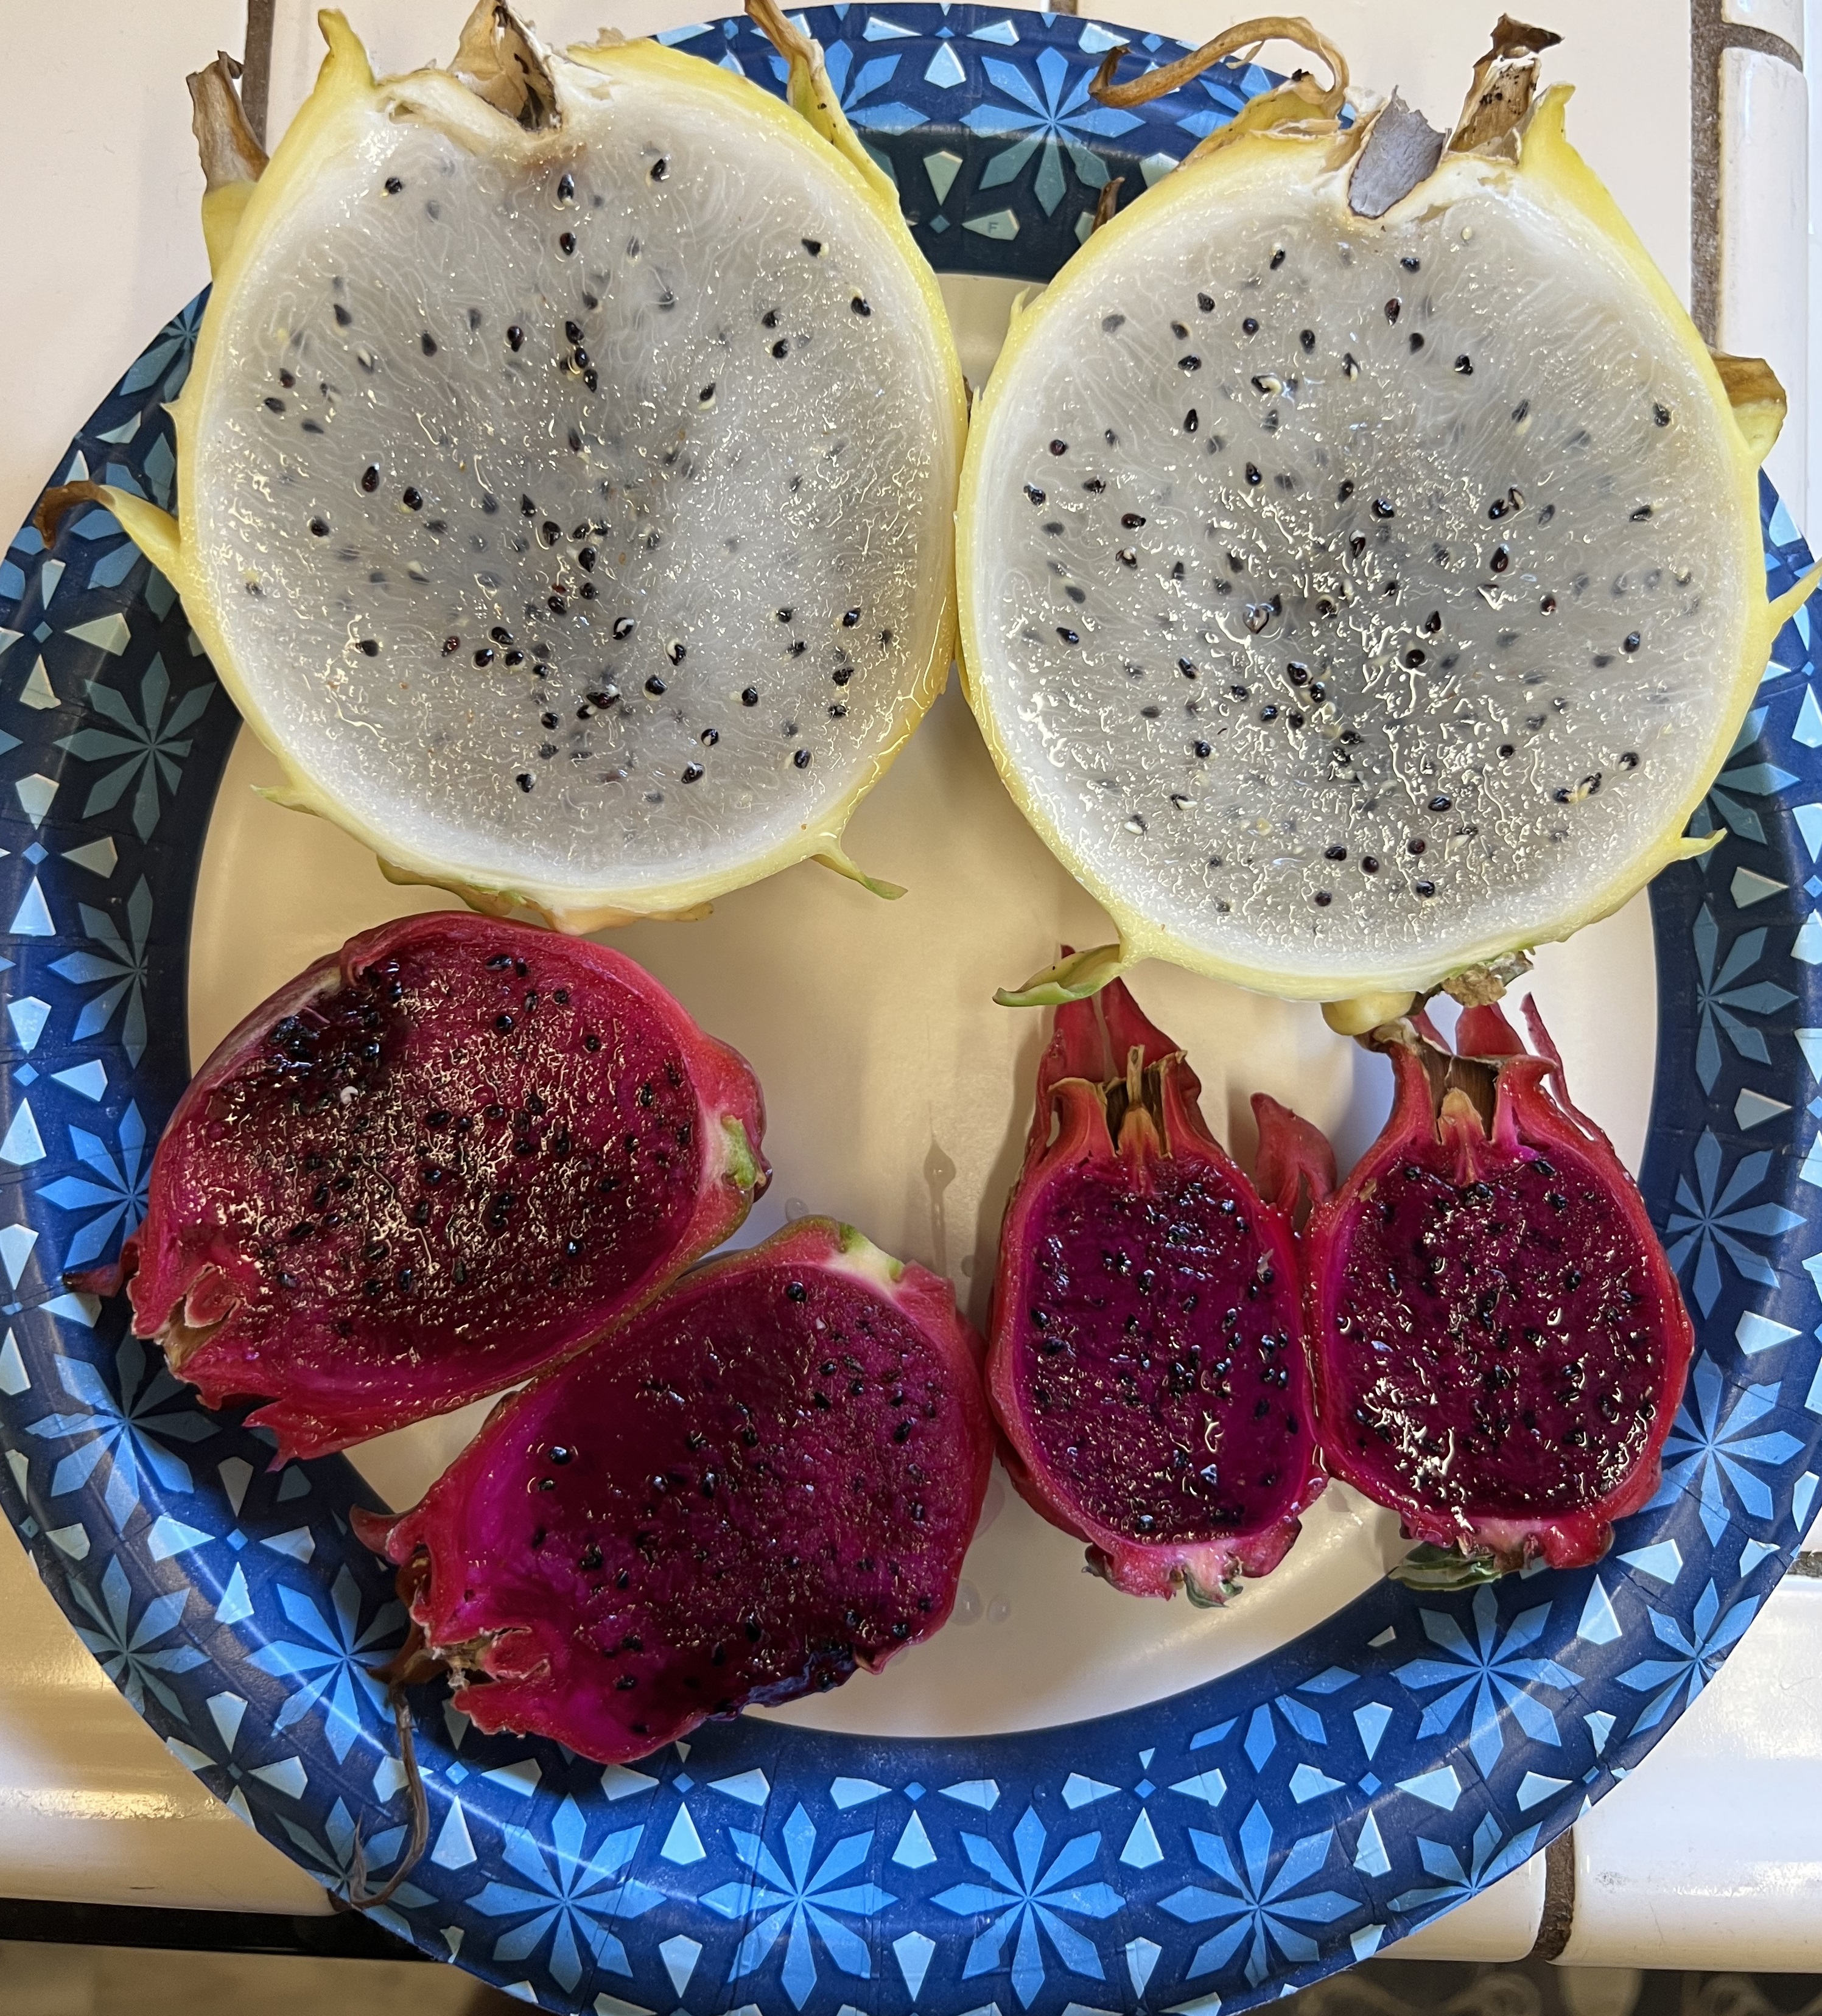 Photo of fruits cut open